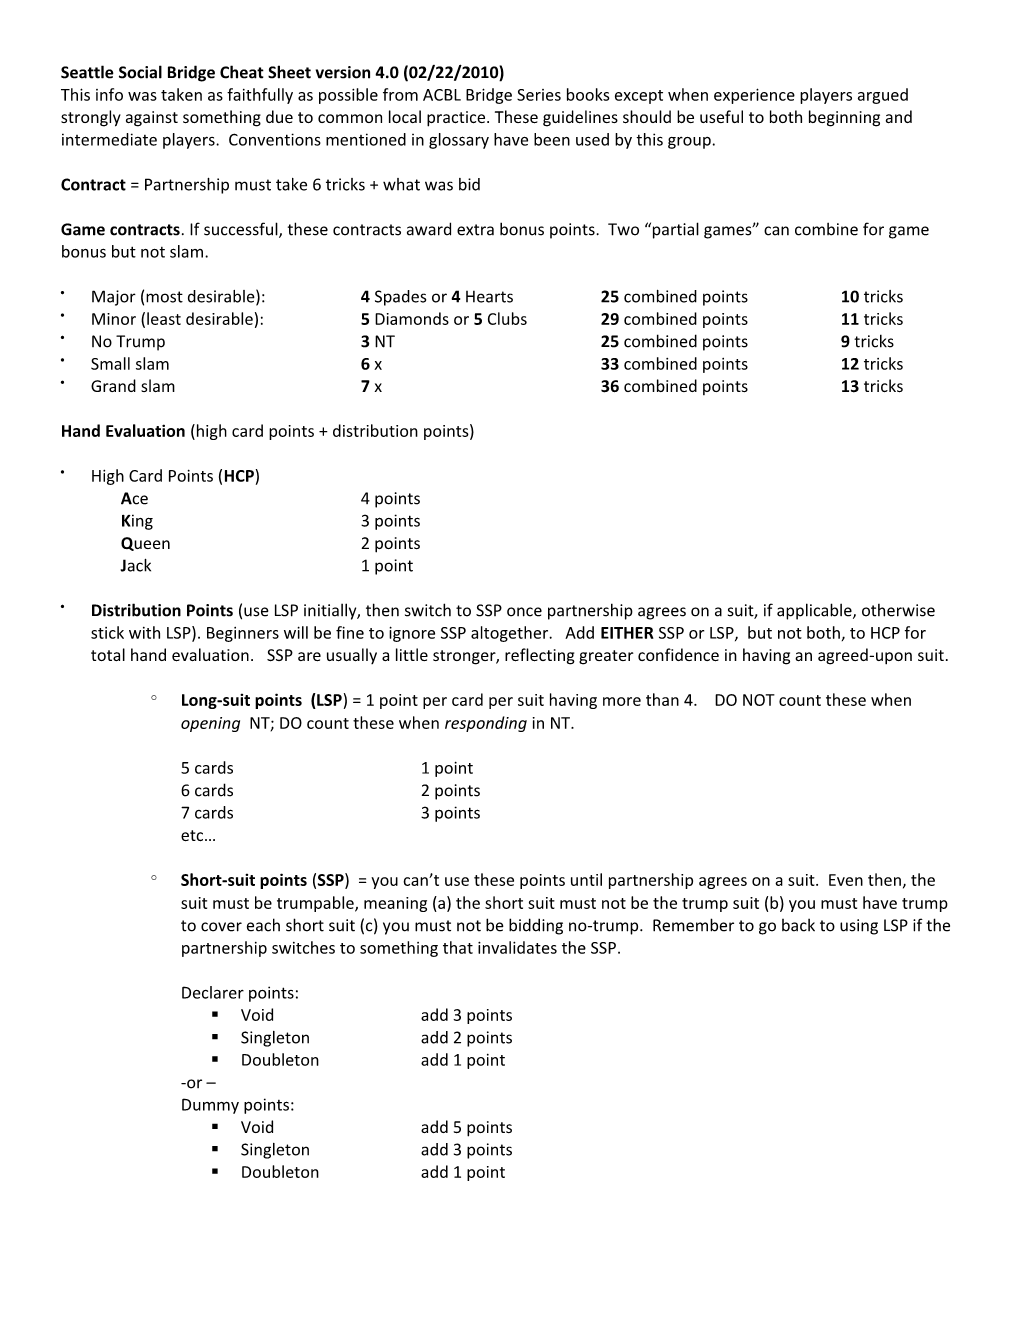 Seattle Social Bridge Cheat Sheet Version 4.0 (02/22/2010)